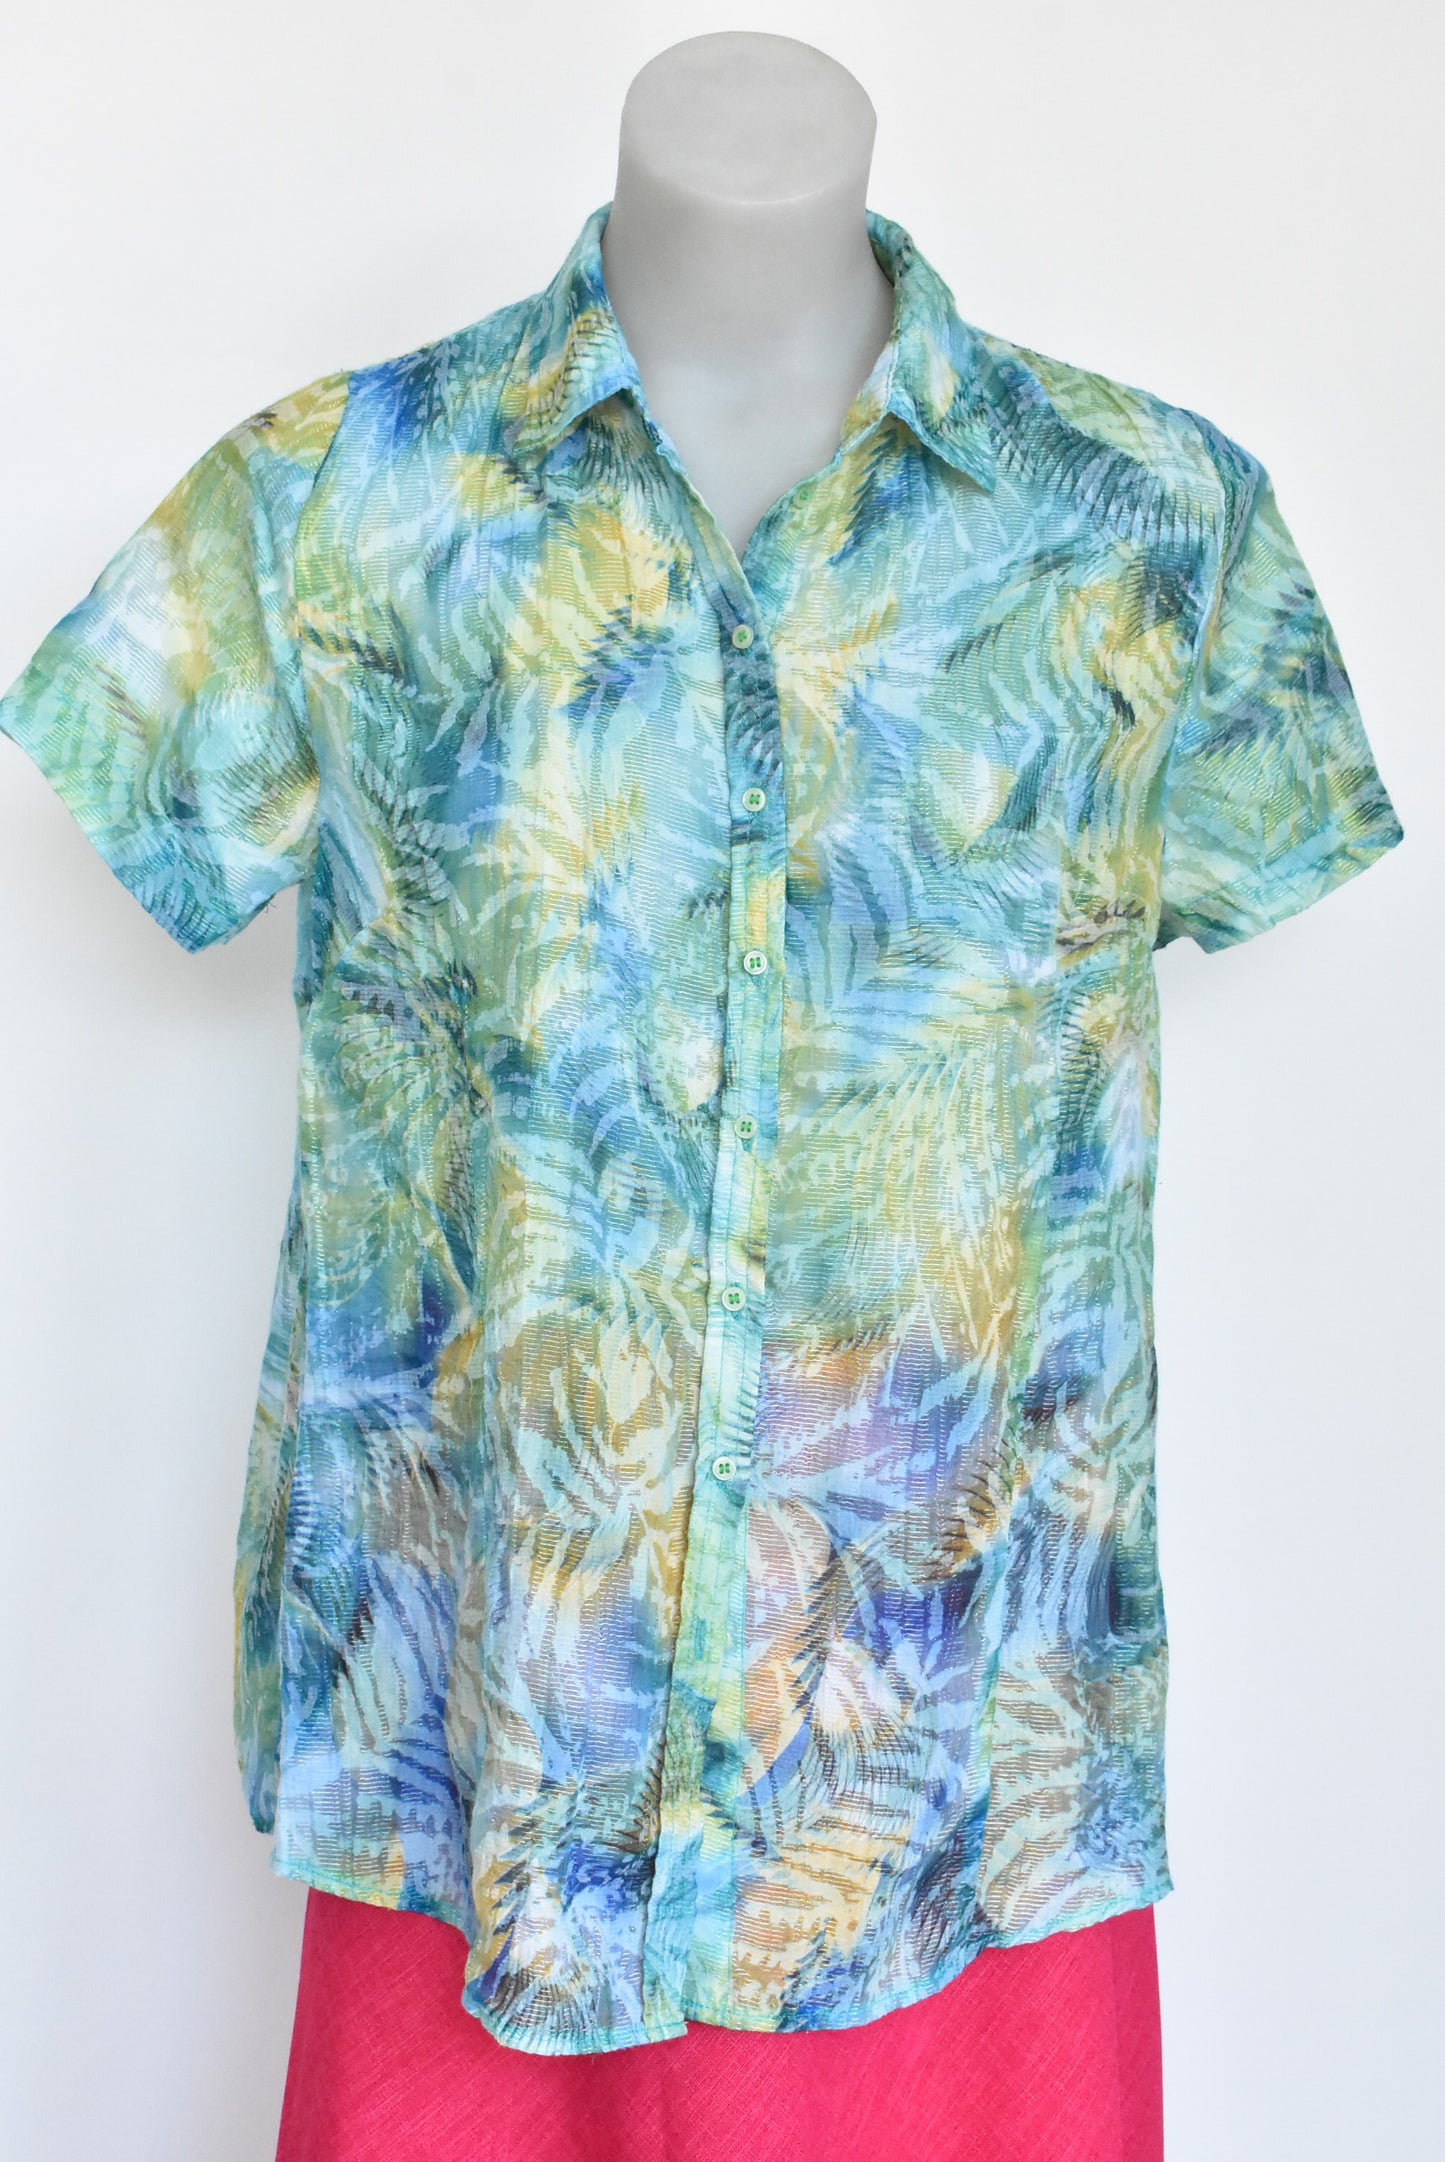 Twin Lakes soft, bright and shiny shirt, 8